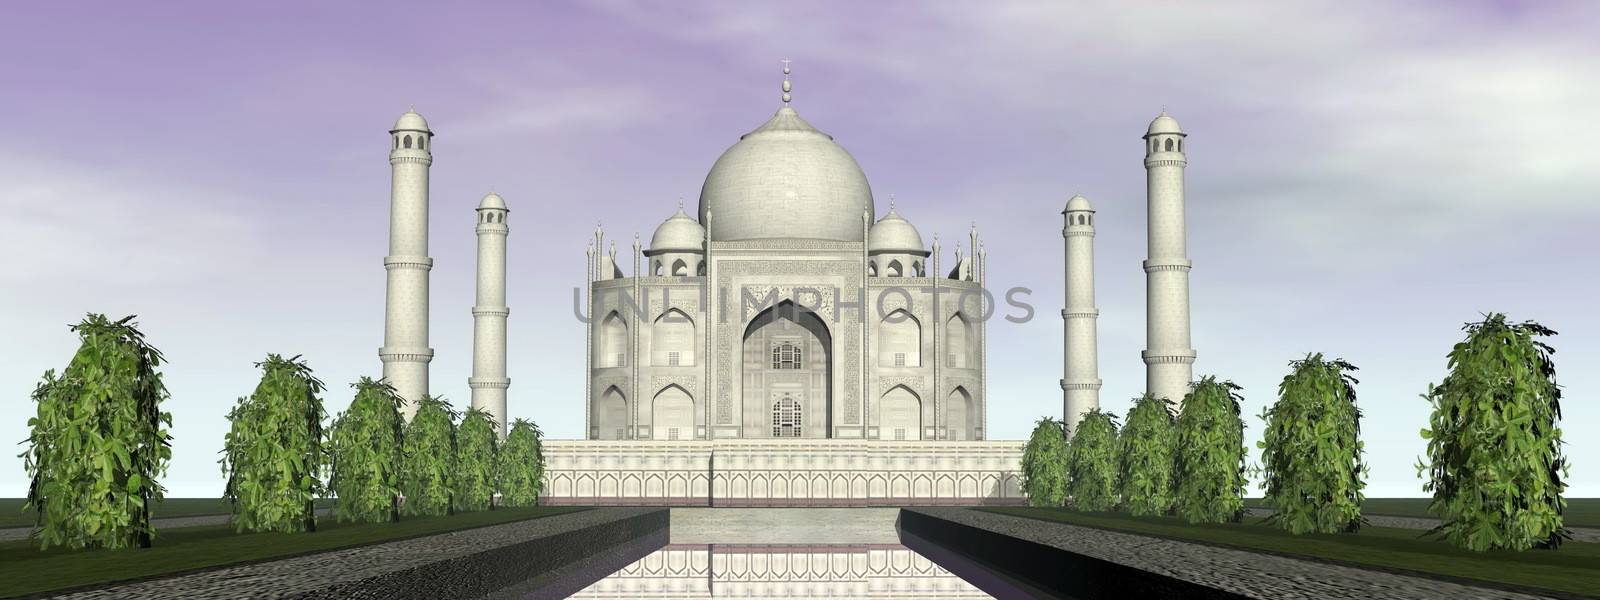 Taj Mahal mausoleum, Agra, India - 3D render by Elenaphotos21